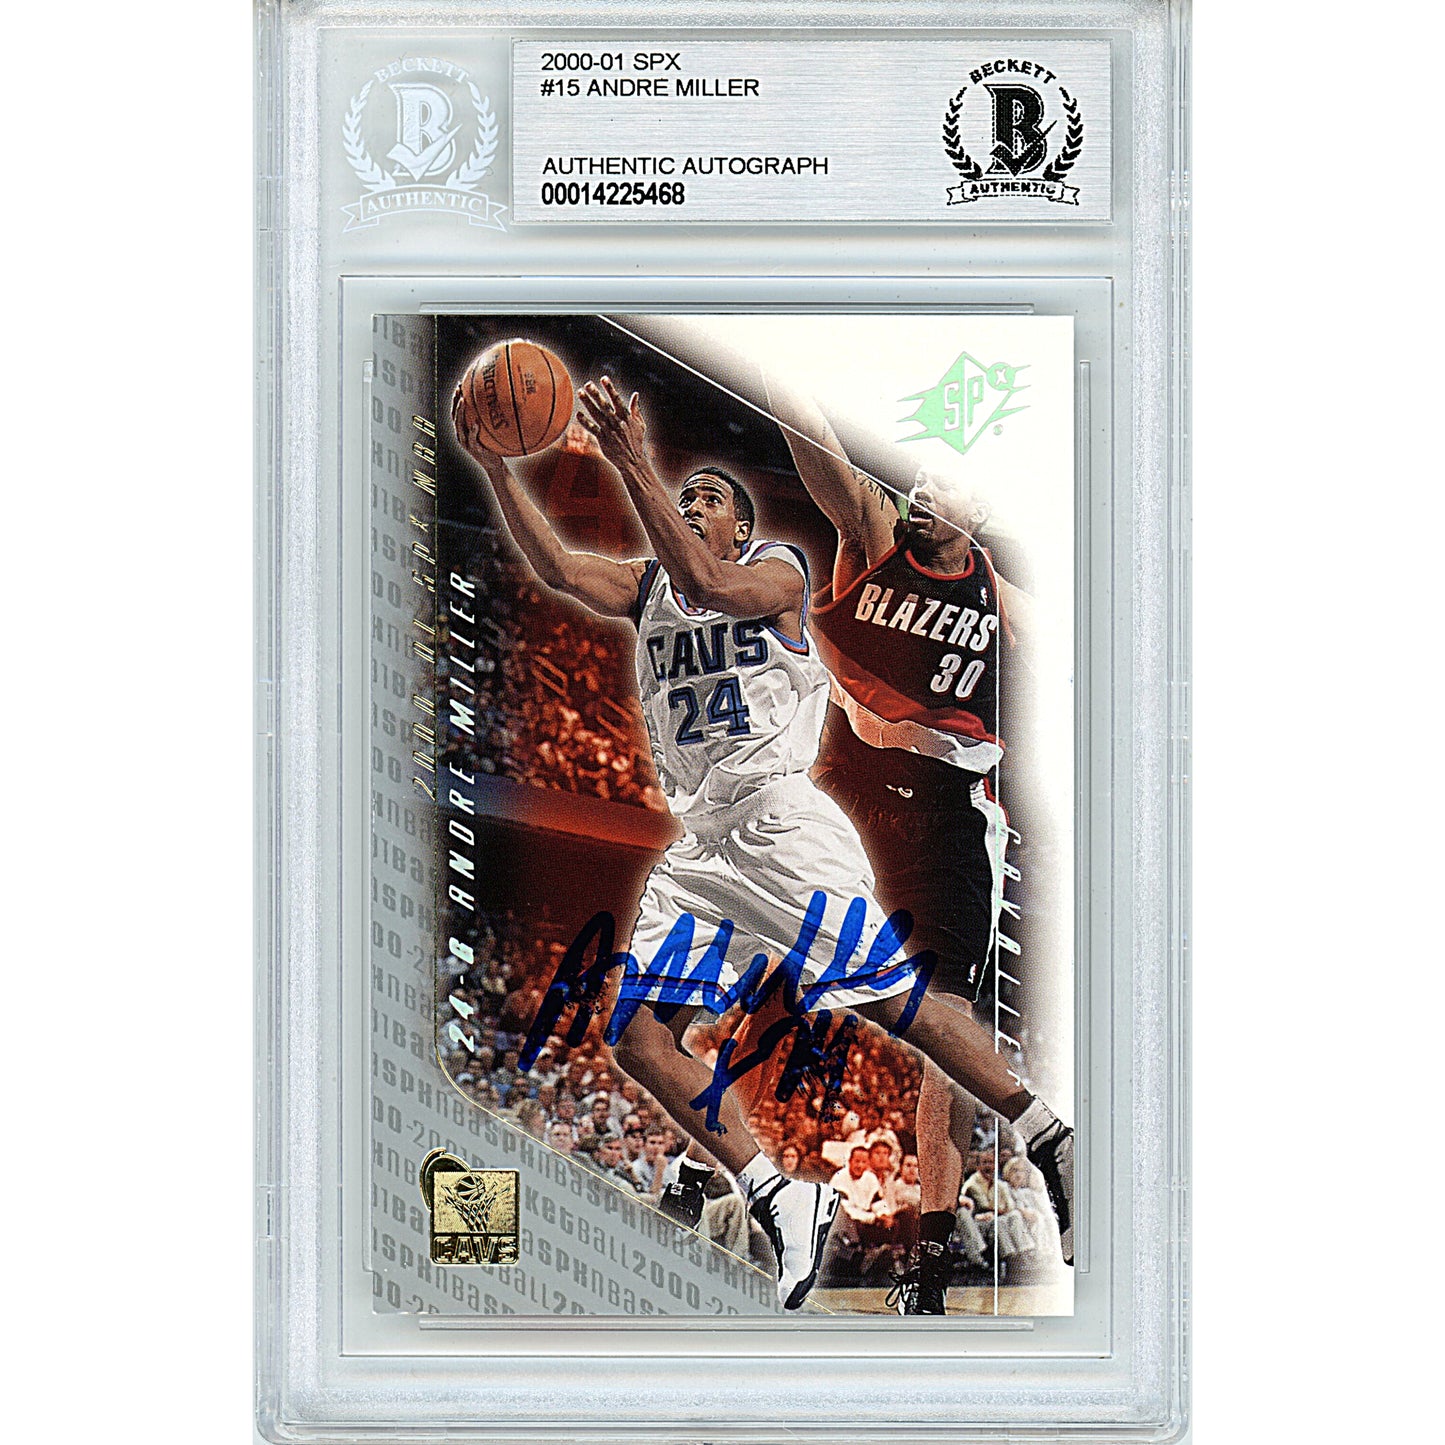 Basketballs- Autographed- Andre Miller Signed Cleveland Cavaliers 2000-2001 SPX Basketball Card Beckett BAS Slabbed 000142254568 - 101